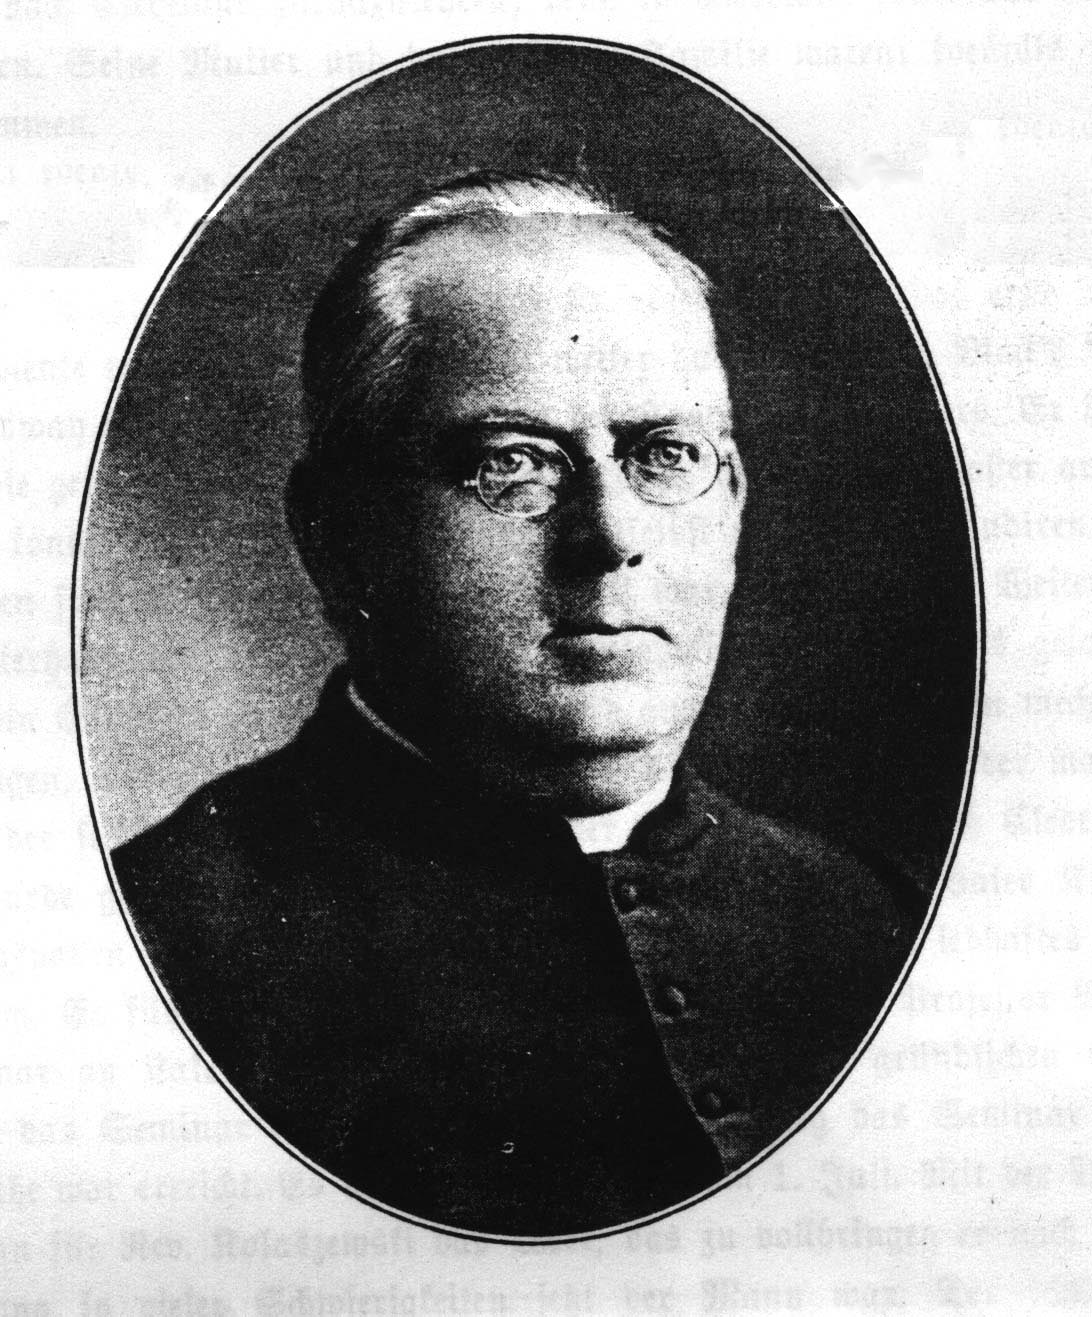 Francis Kolaszewski